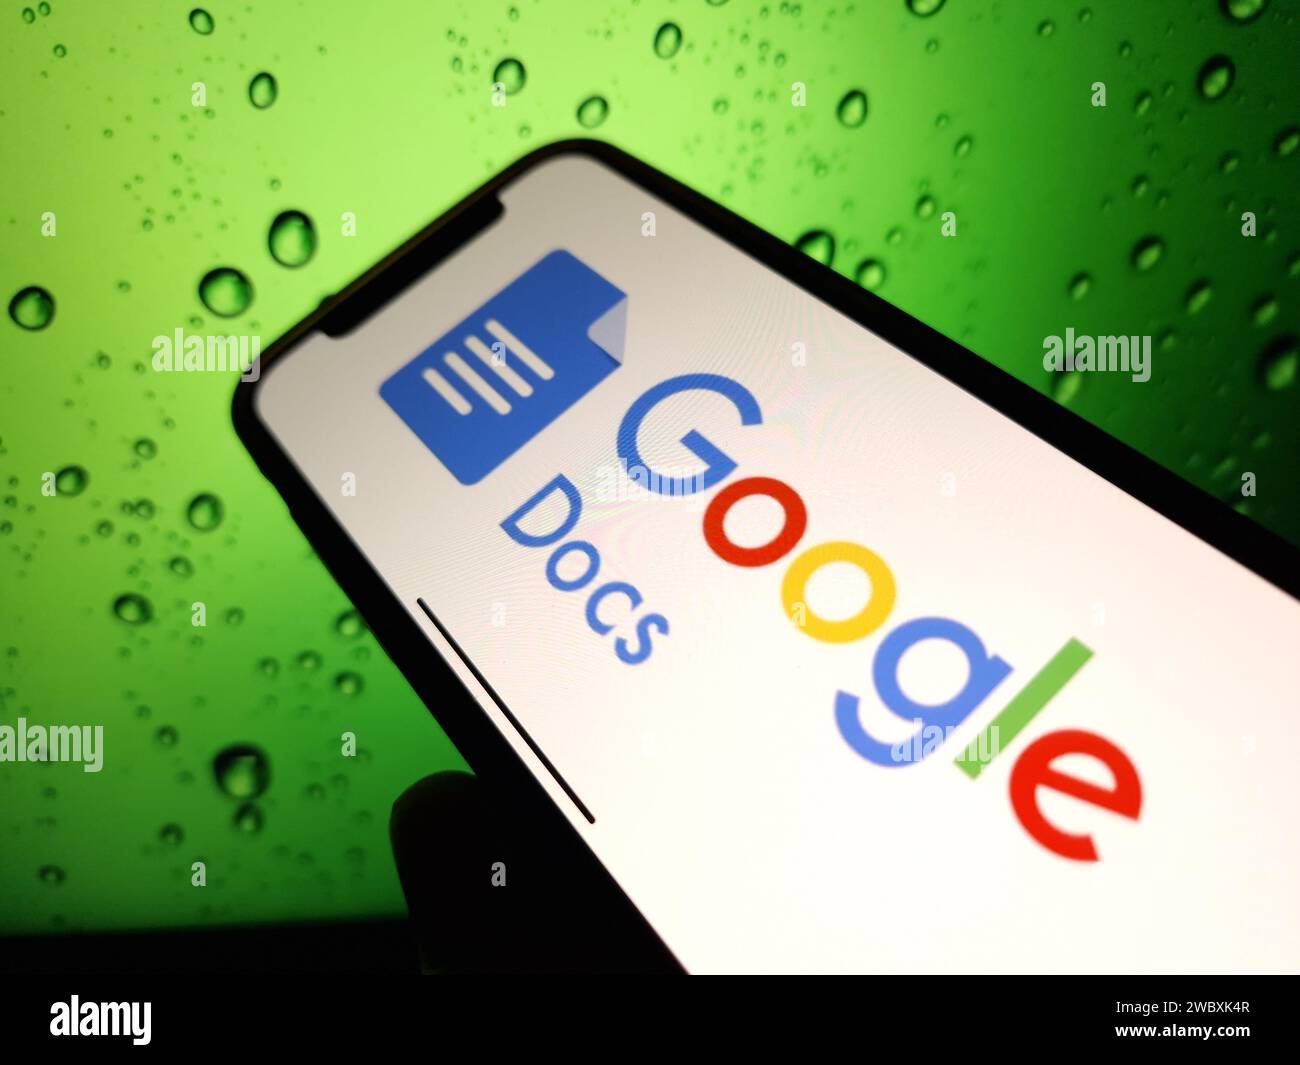 Konskie, Poland - January 12, 2024: Google Docs logo displayed on mobile phone screen Stock Photo